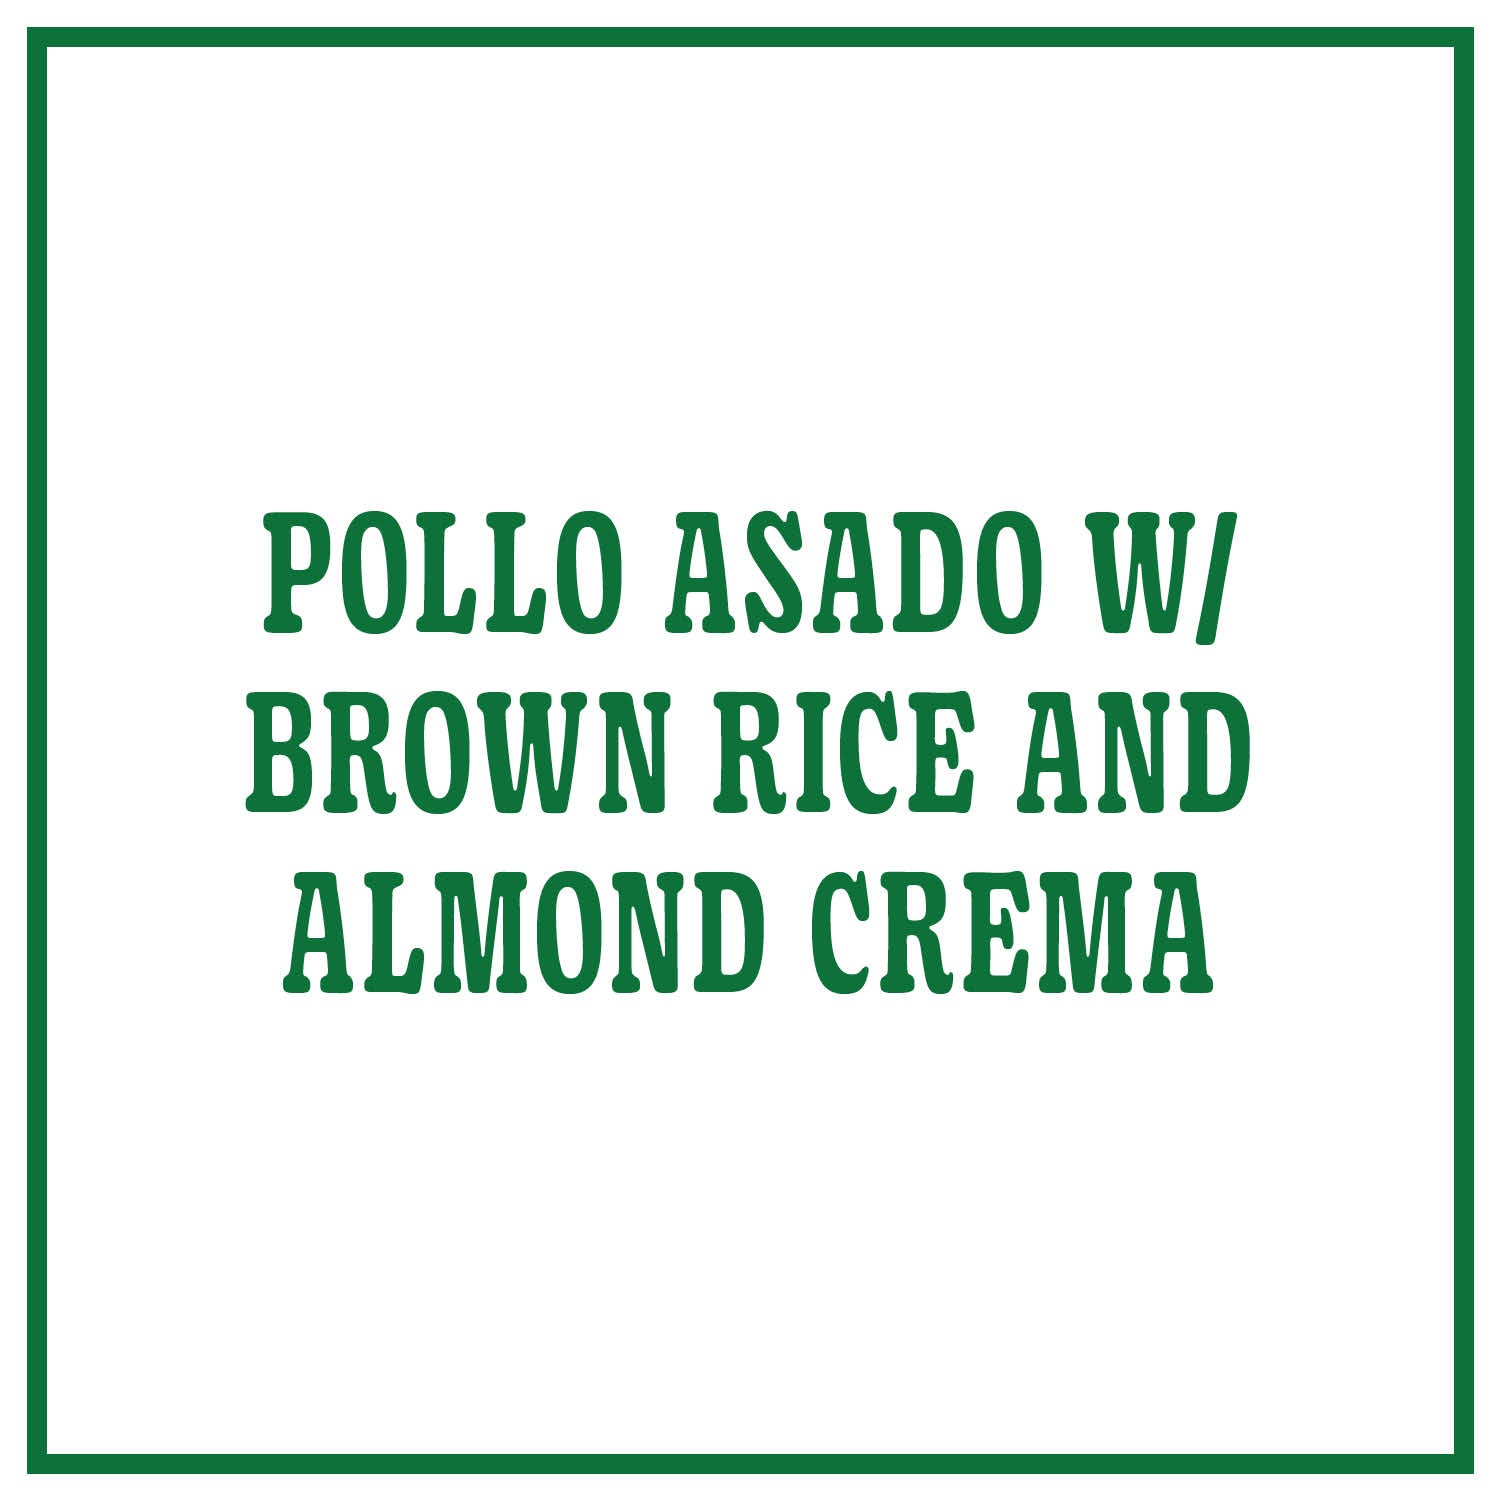 Pollo Asado with Brown Rice and Almond Crema